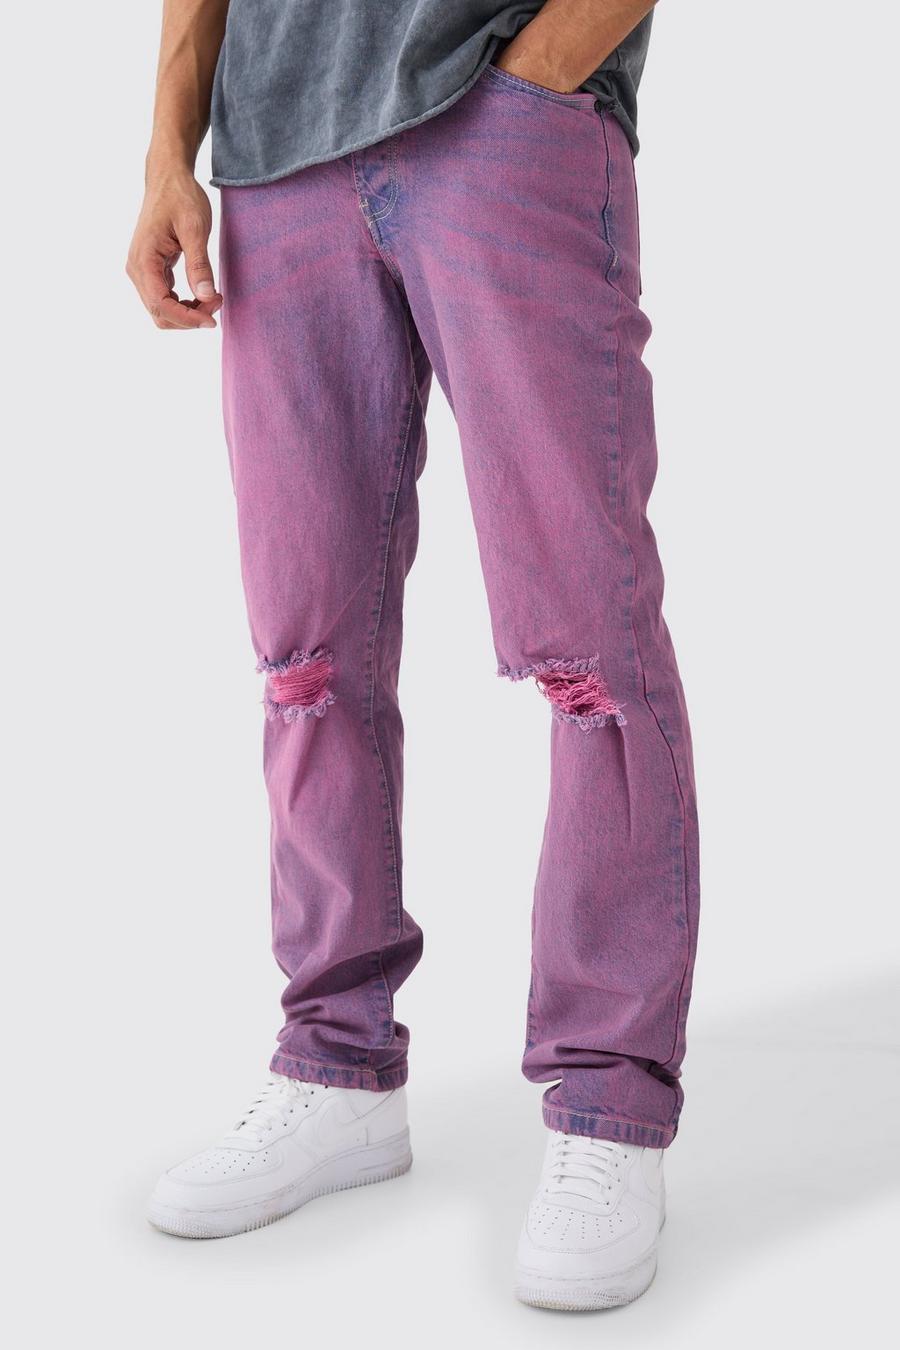 Lockere getönte Jeans, Pink rose